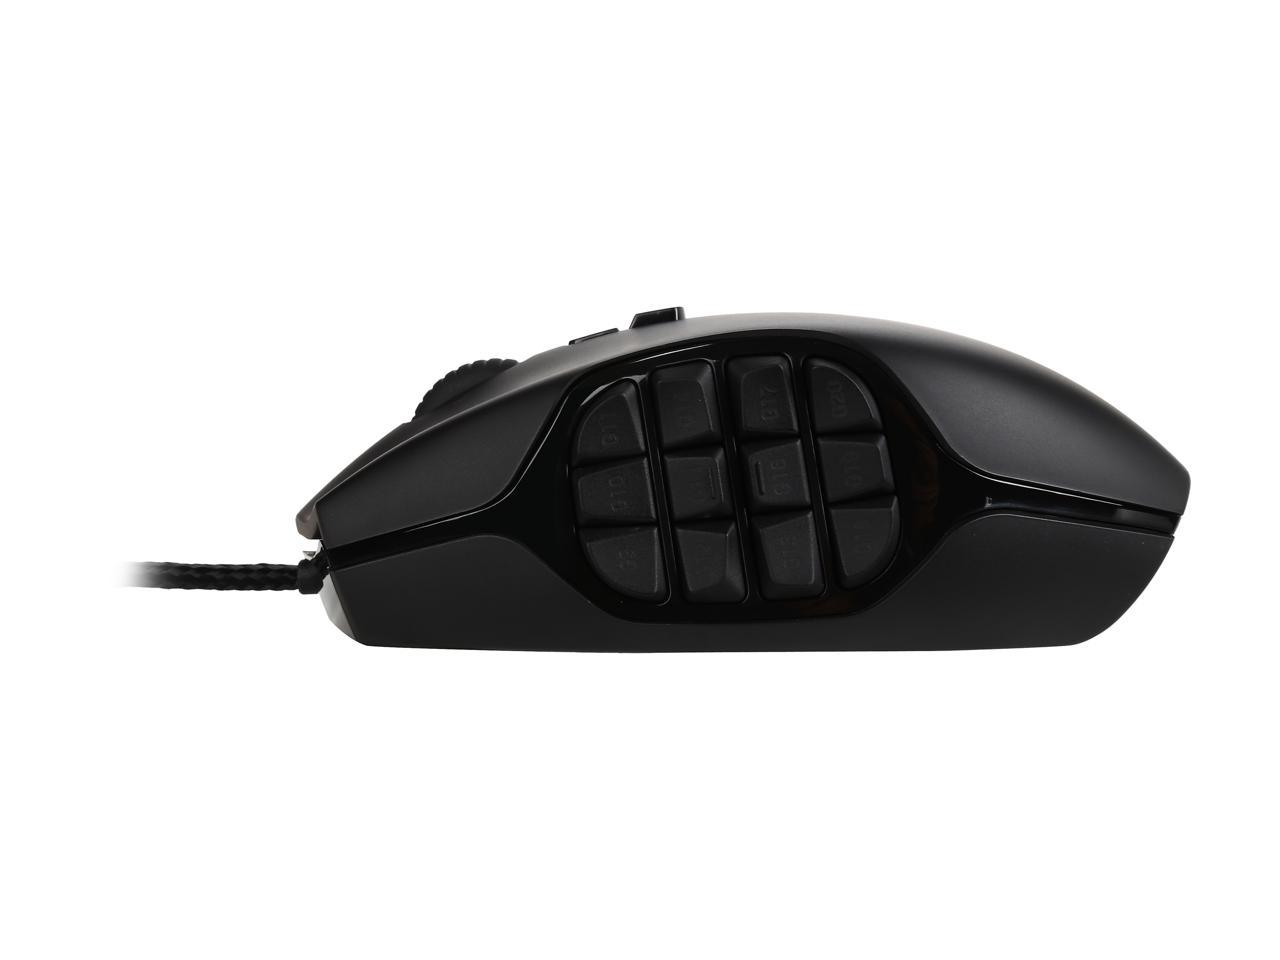 Logitech G600MMO Gaming Mouse - Black